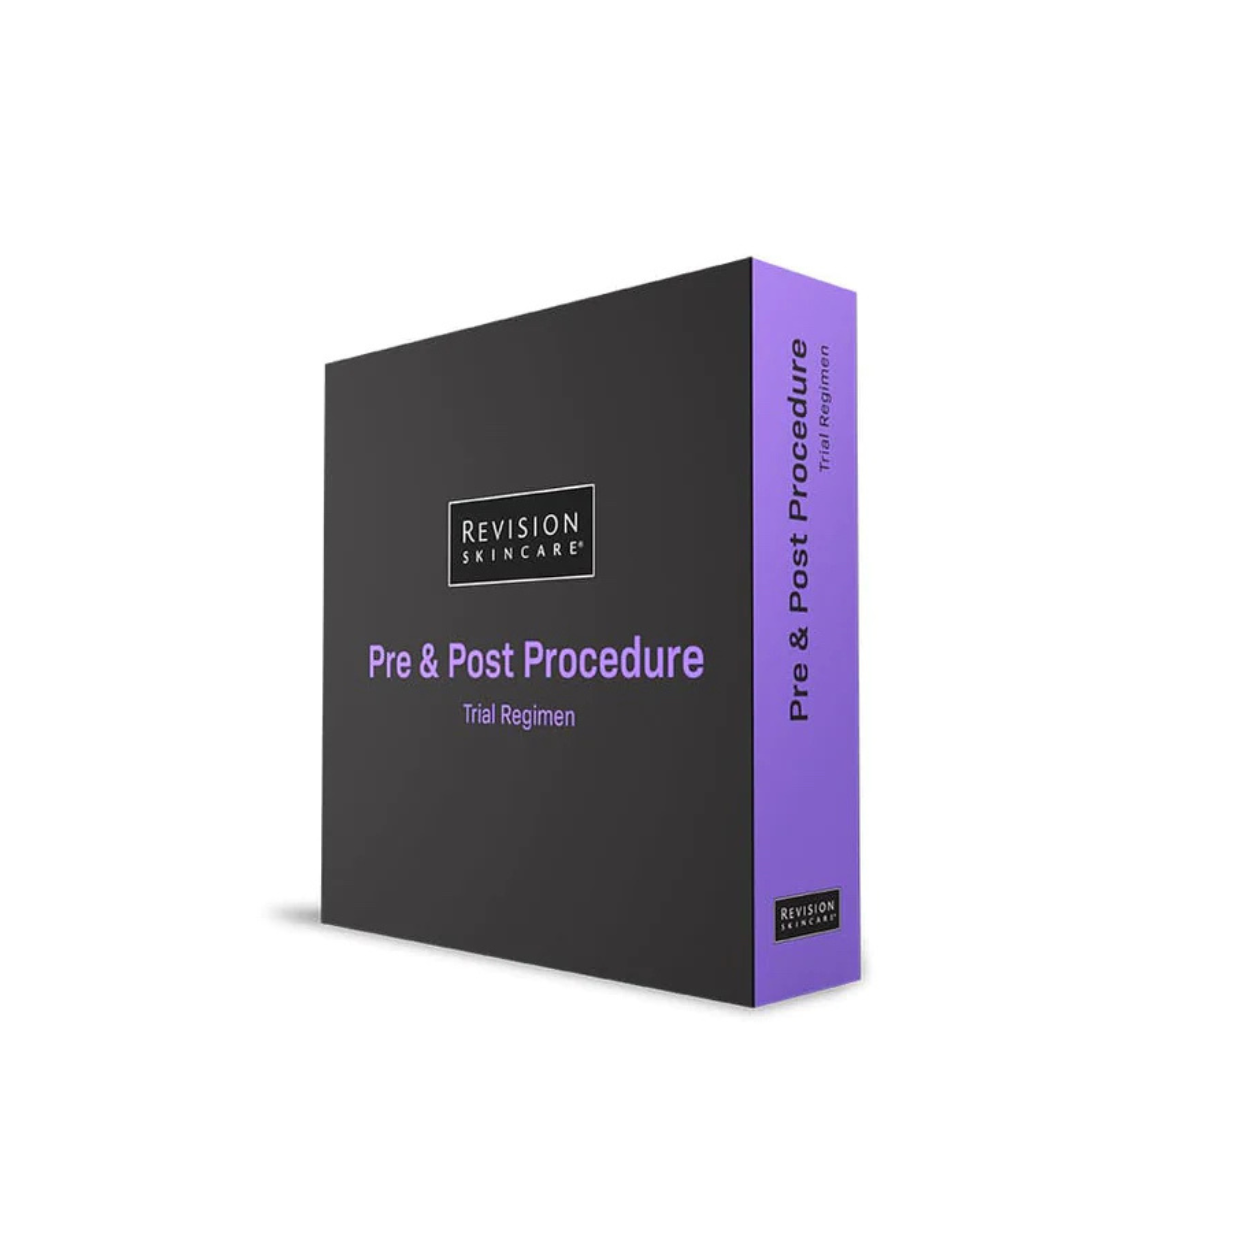 Pre & Post Procedure Limited Edition Trial Regimen